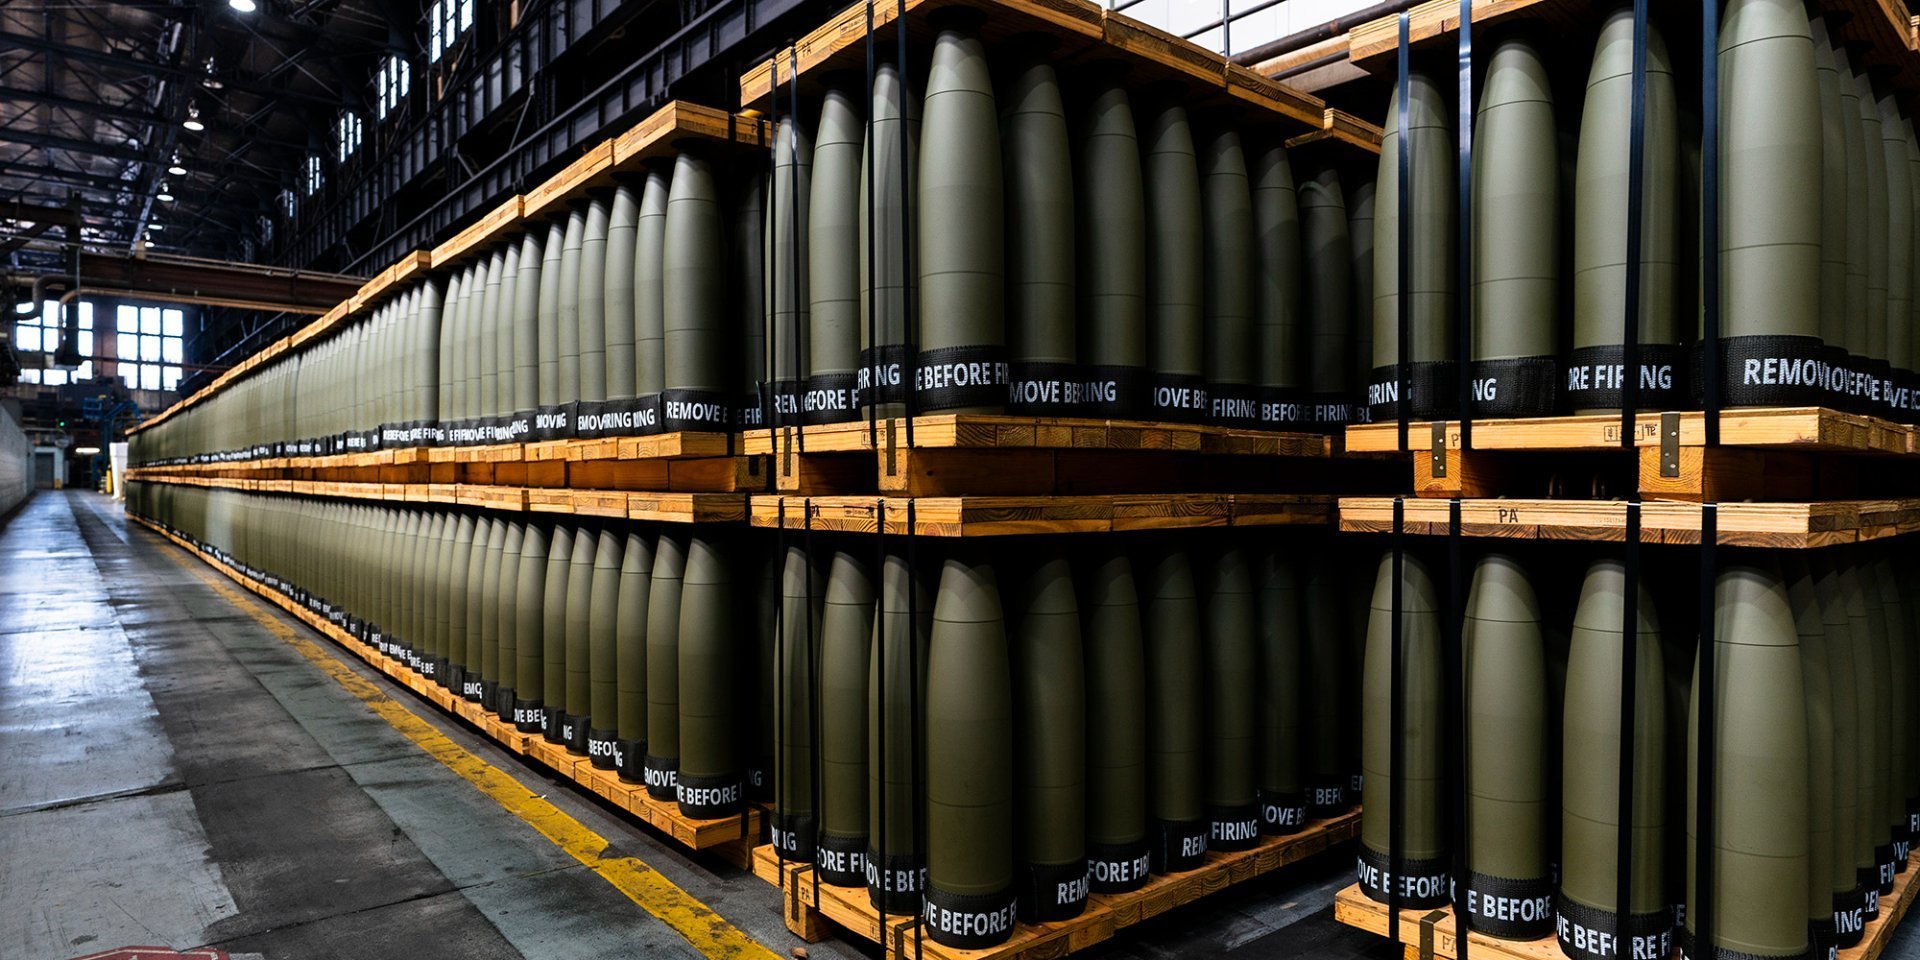 Czech Republic locates extra 700,000 shells for Ukraine